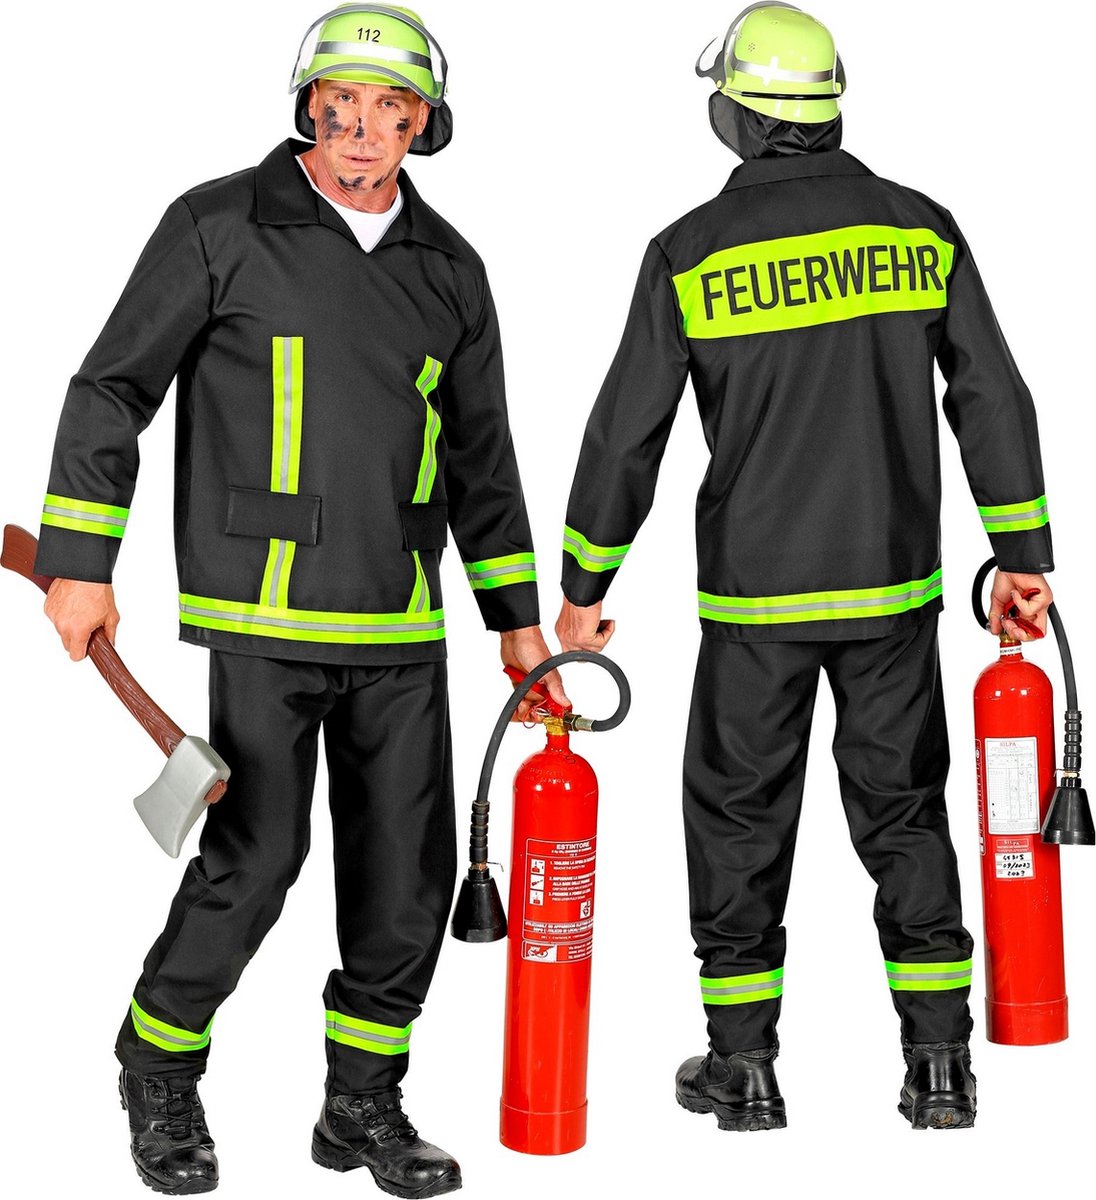 Widmann - Brandweer Kostuum - Brandweerman Feuerwehr Huizenhoge Vlammen Kostuum - Geel, Zwart - Medium - Carnavalskleding - Verkleedkleding